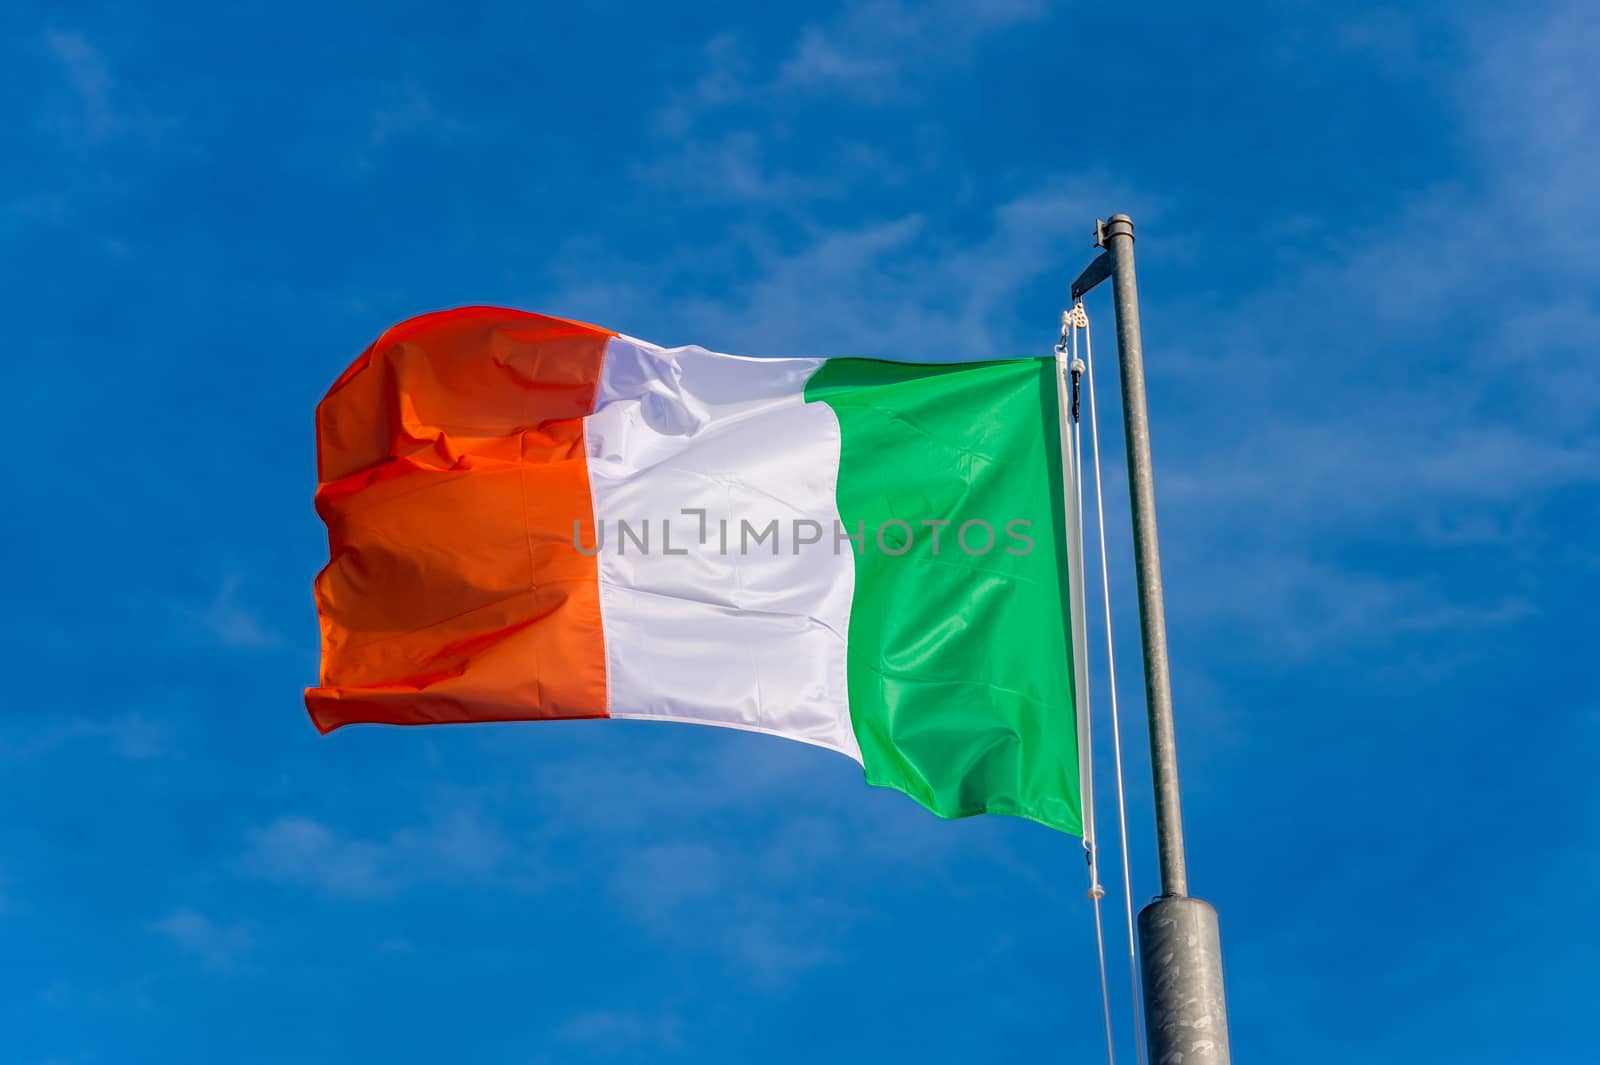 Italian flag waving against blue sky in Boulogne sur Mer, France by mbruxelle